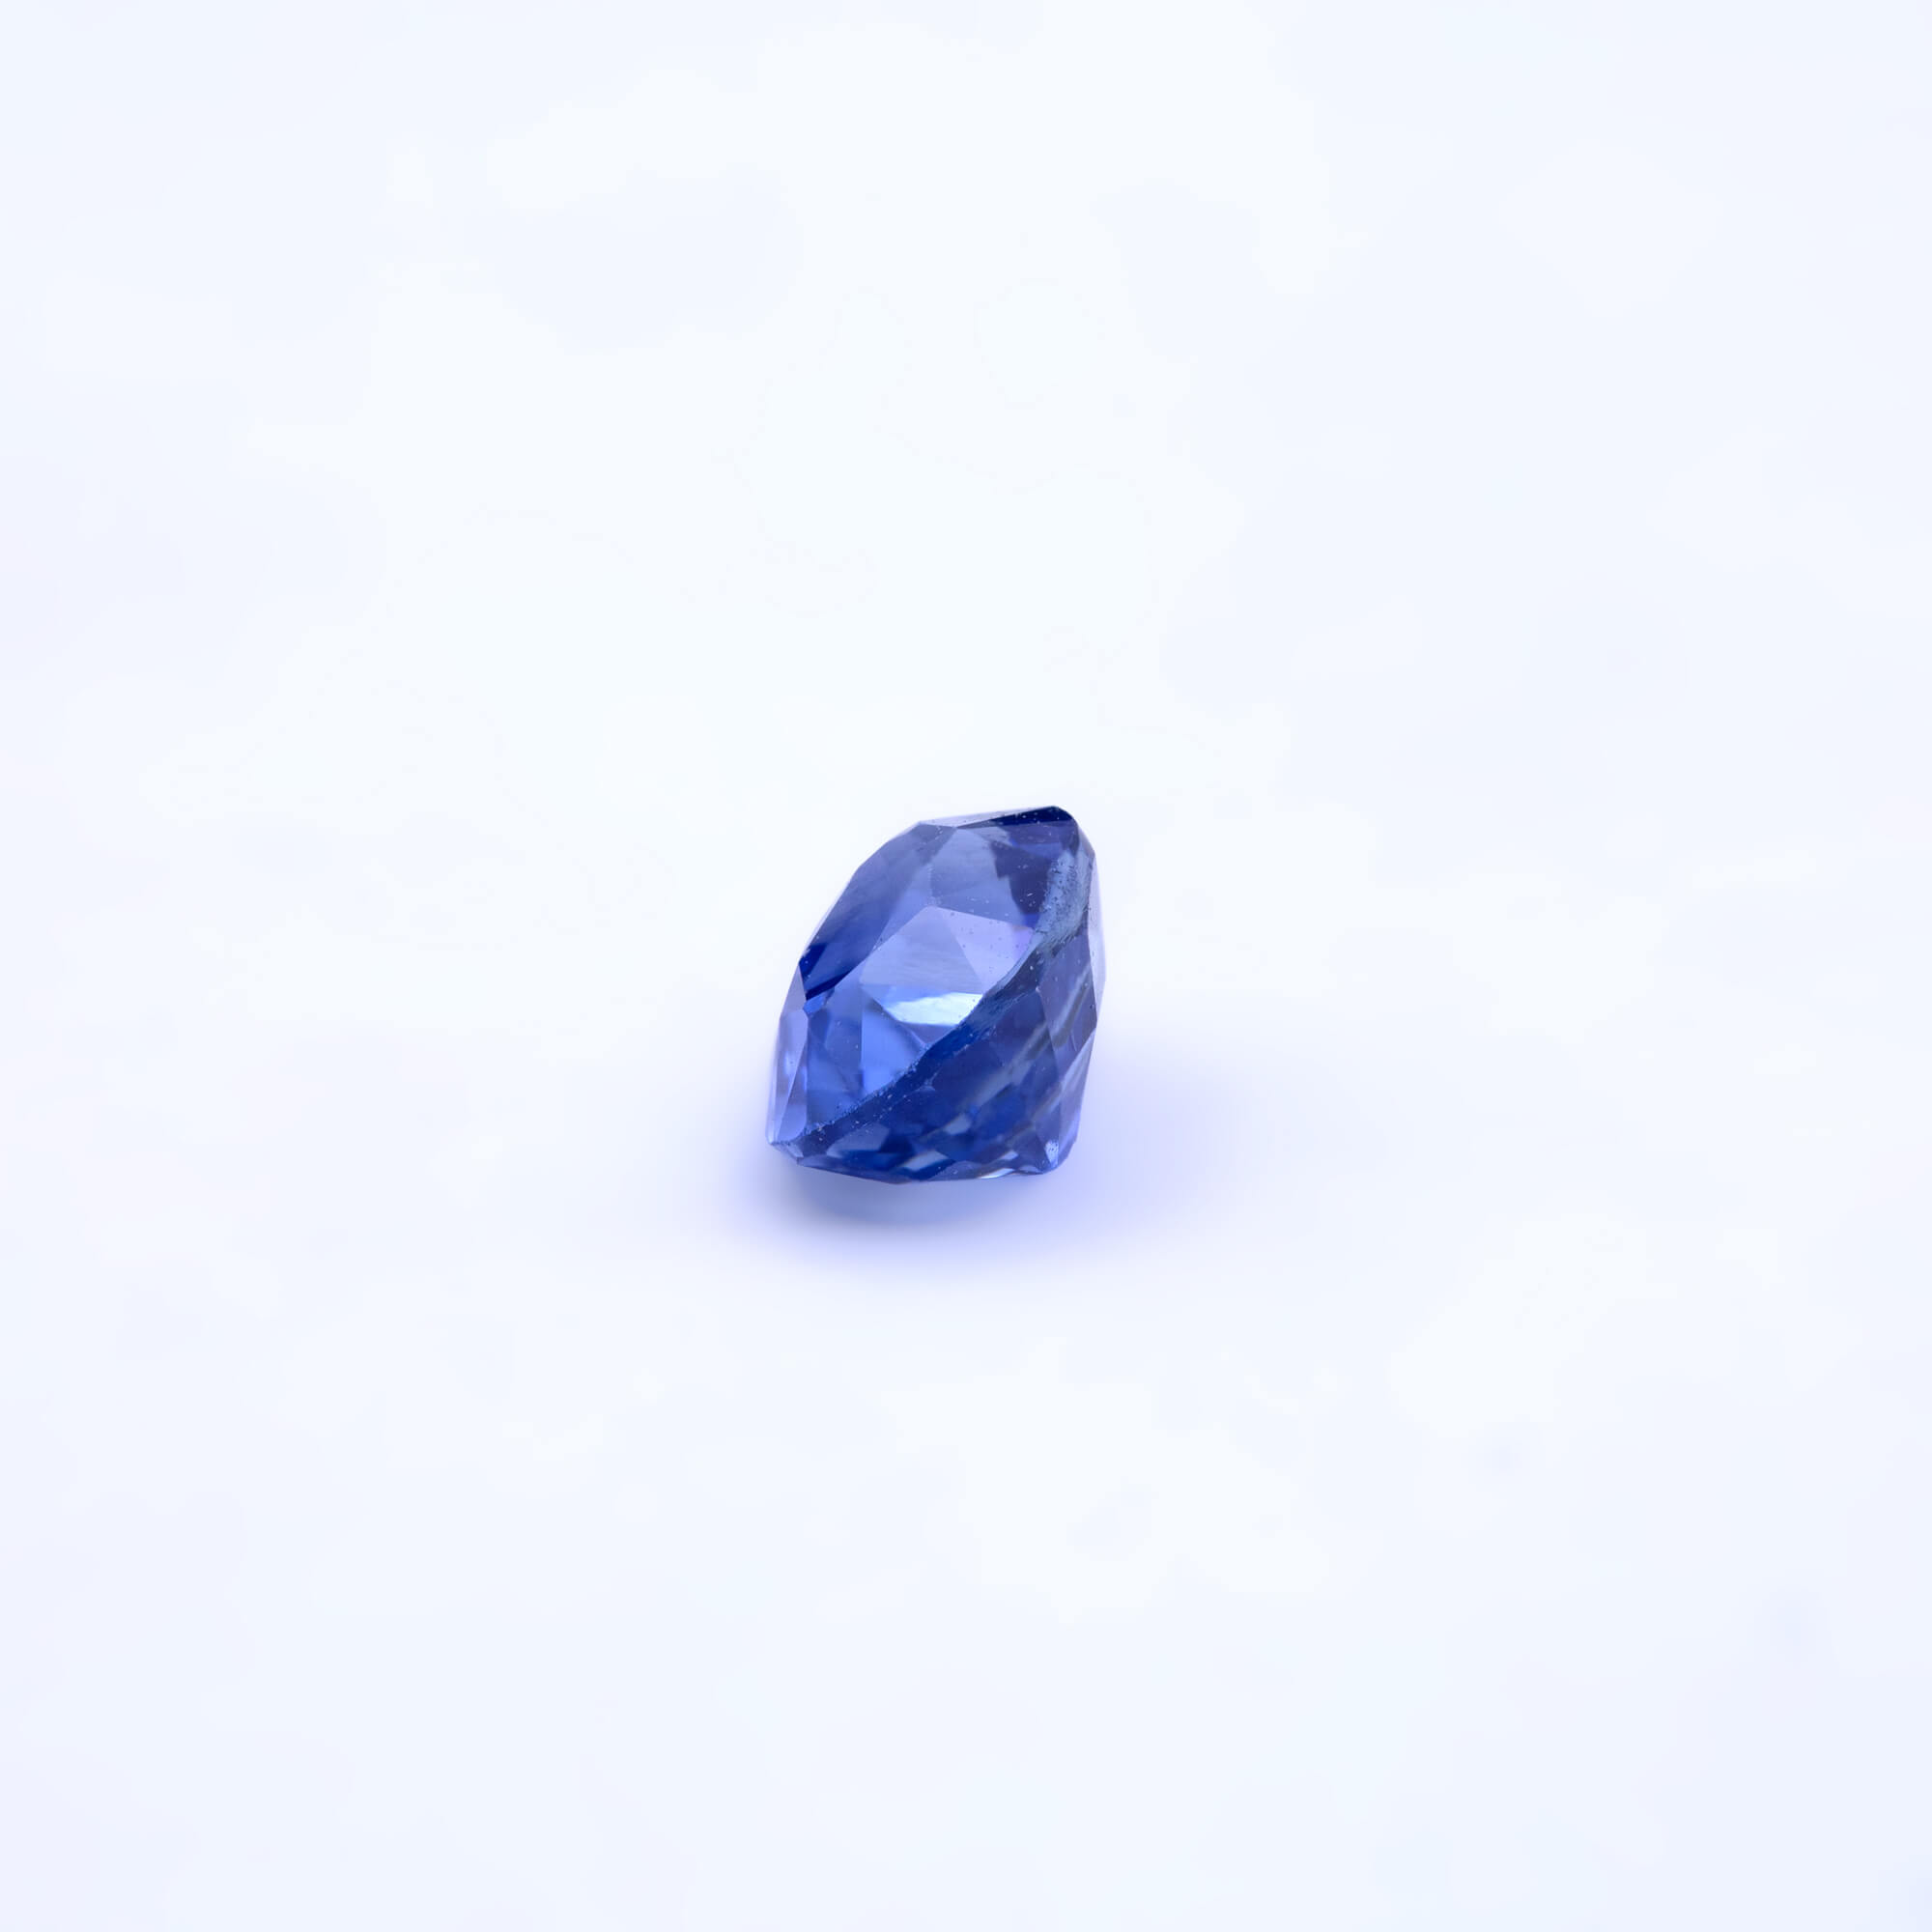 un-heated blue sapphire - 2